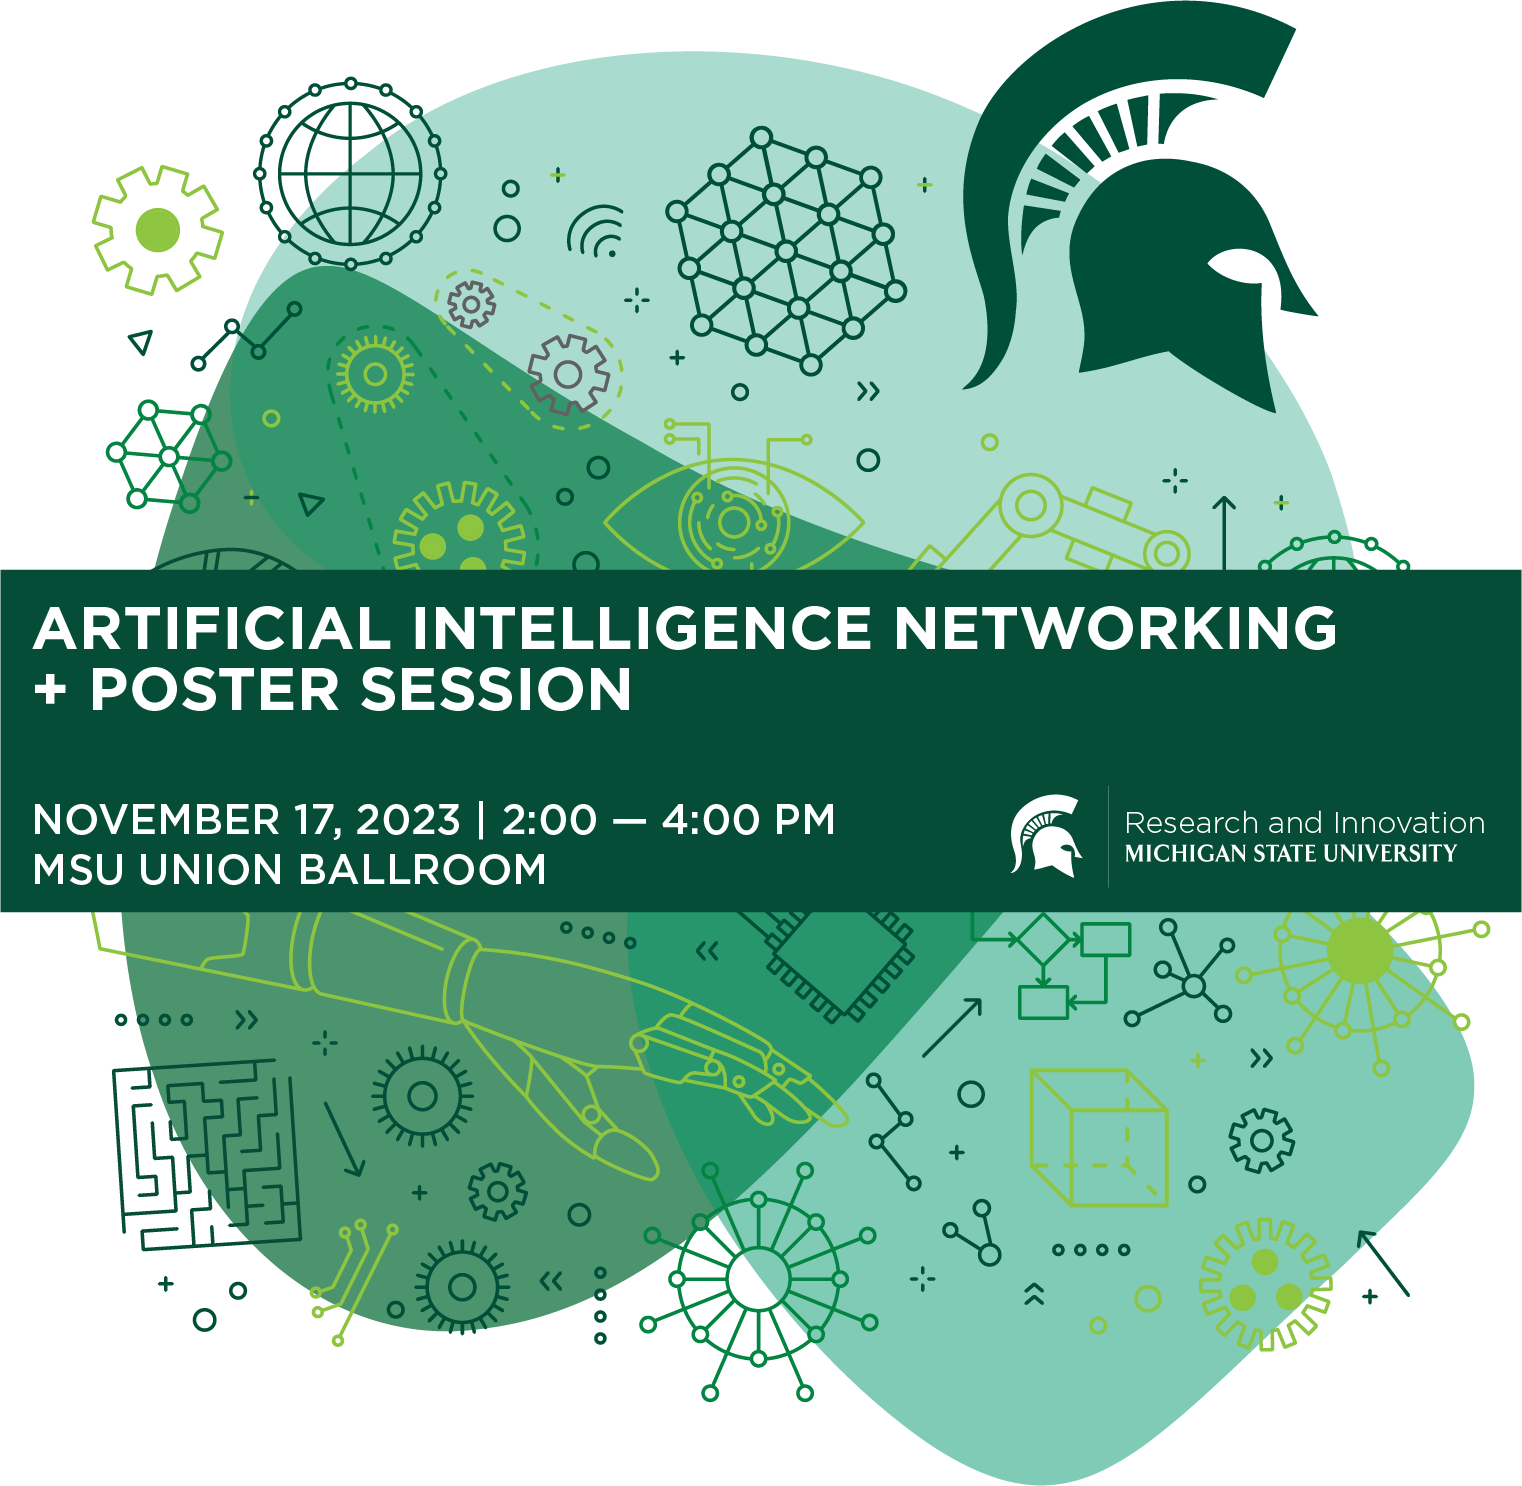 AI networking and poster session, November 17, 2023, 2:00-4:00 PM, MSU Union Ballroom